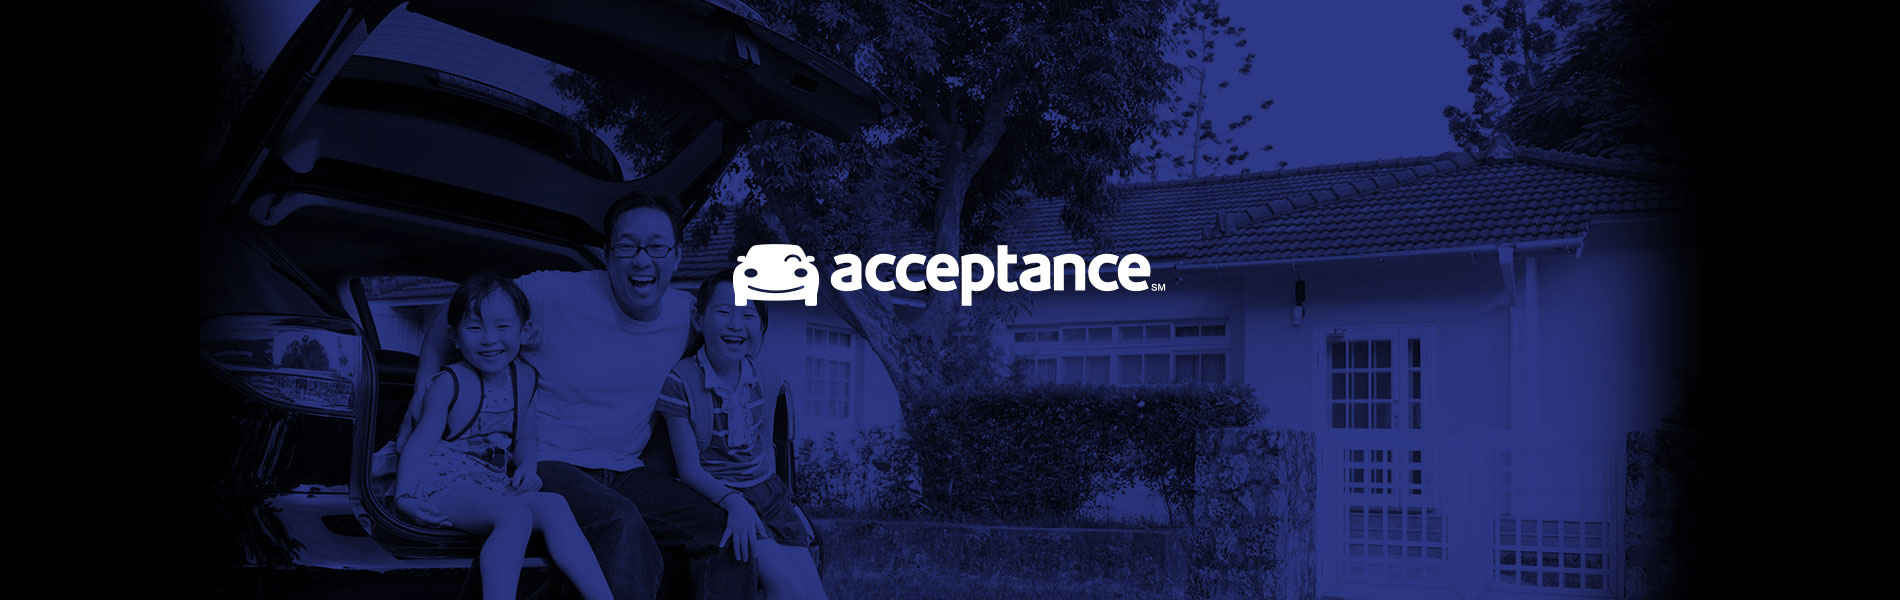 Acceptance Insurance Case Study